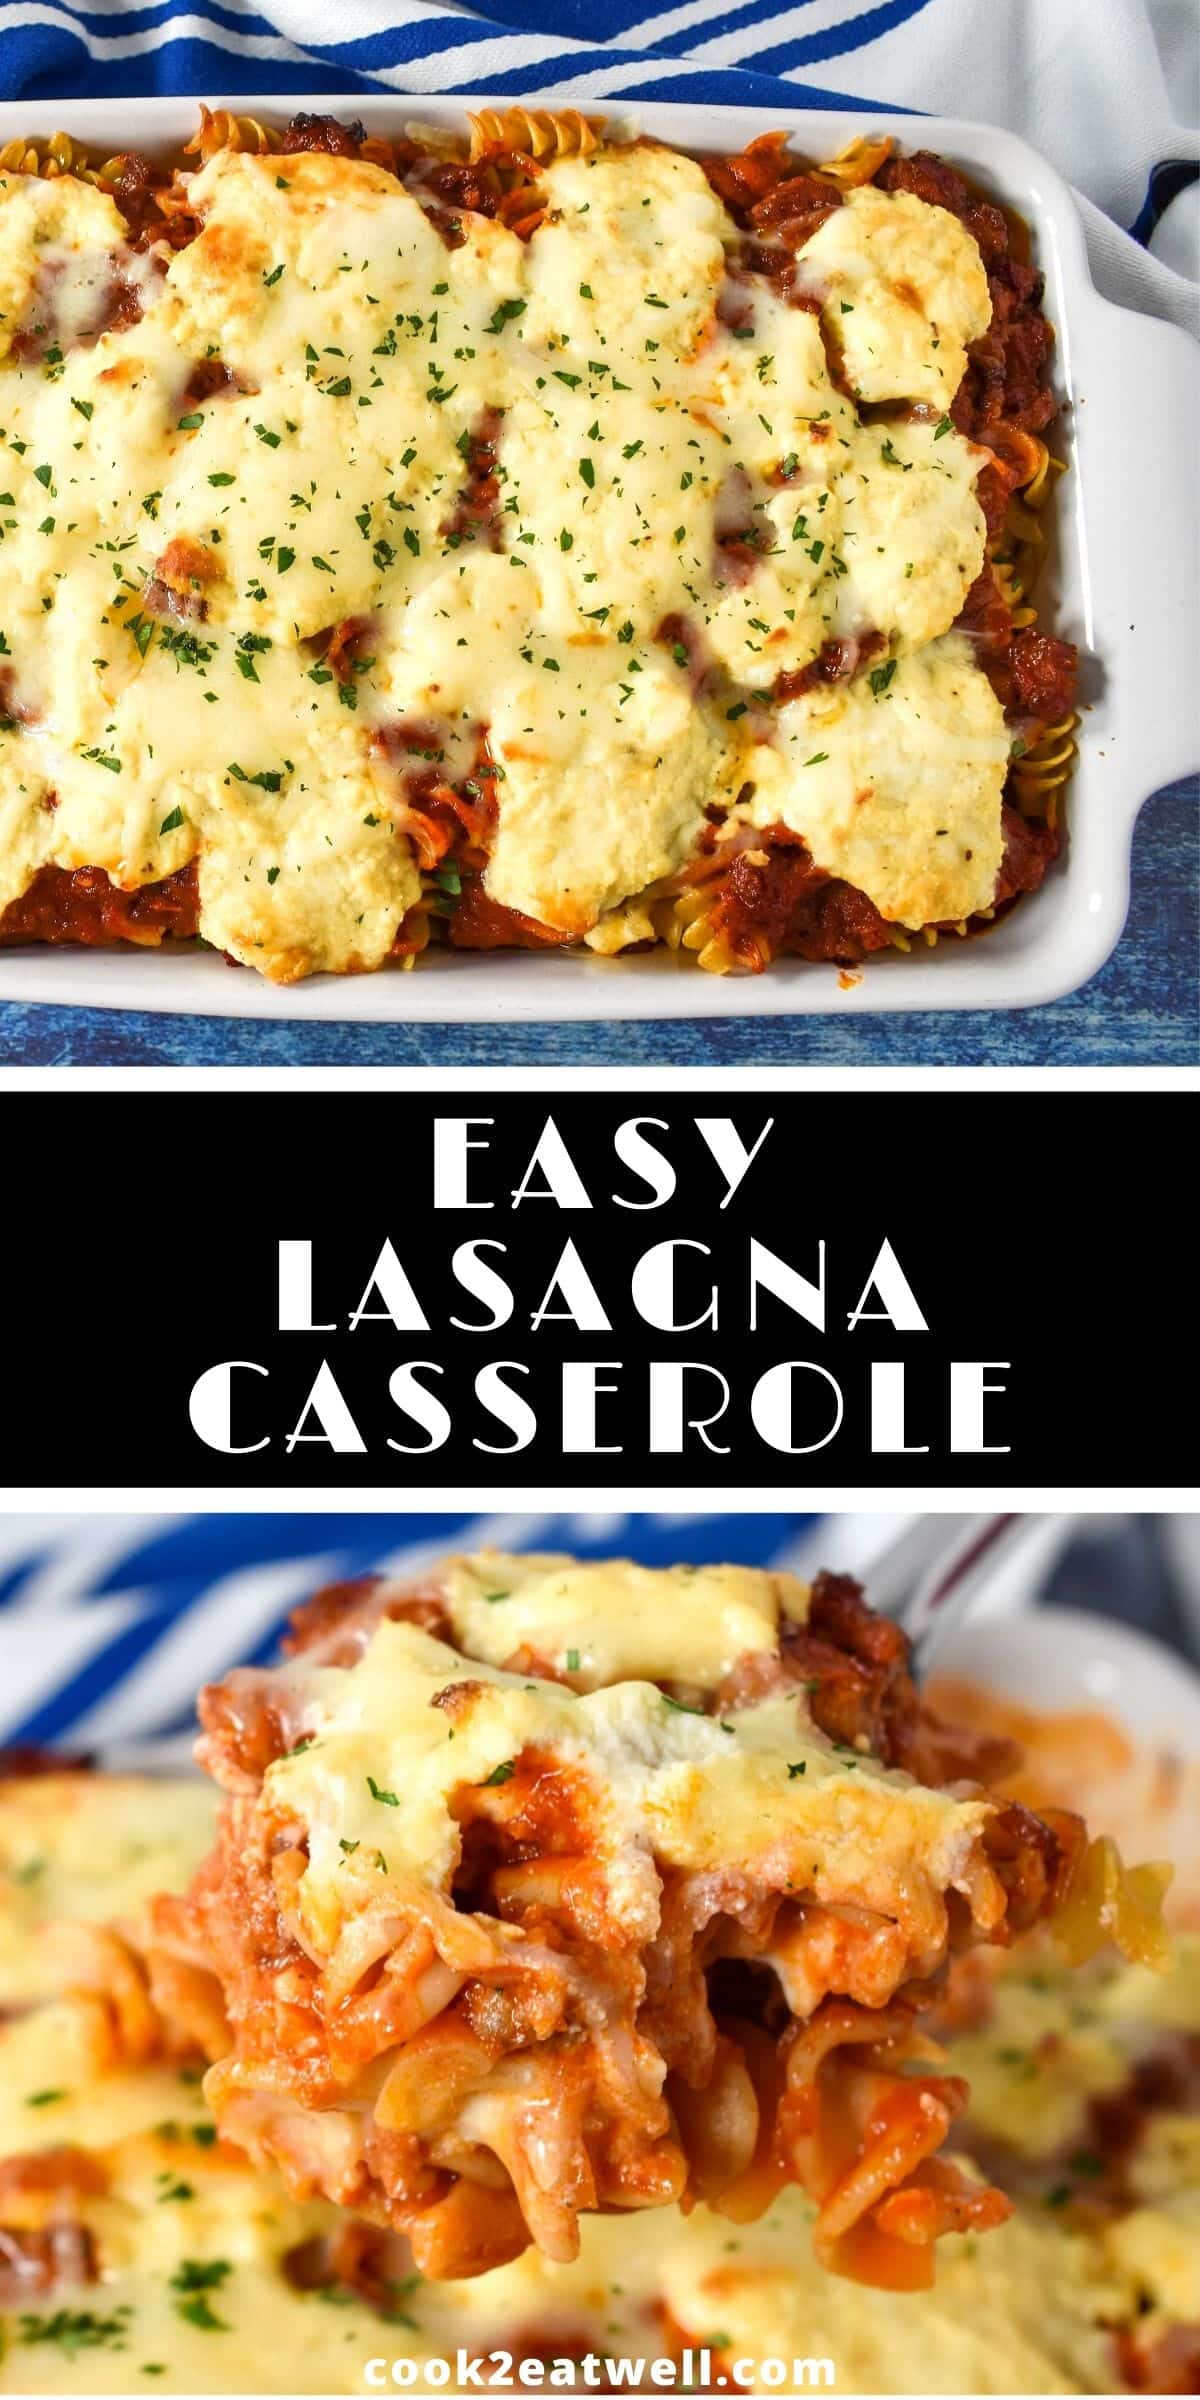 Easy Lasagna Casserole - Cook2eatwell